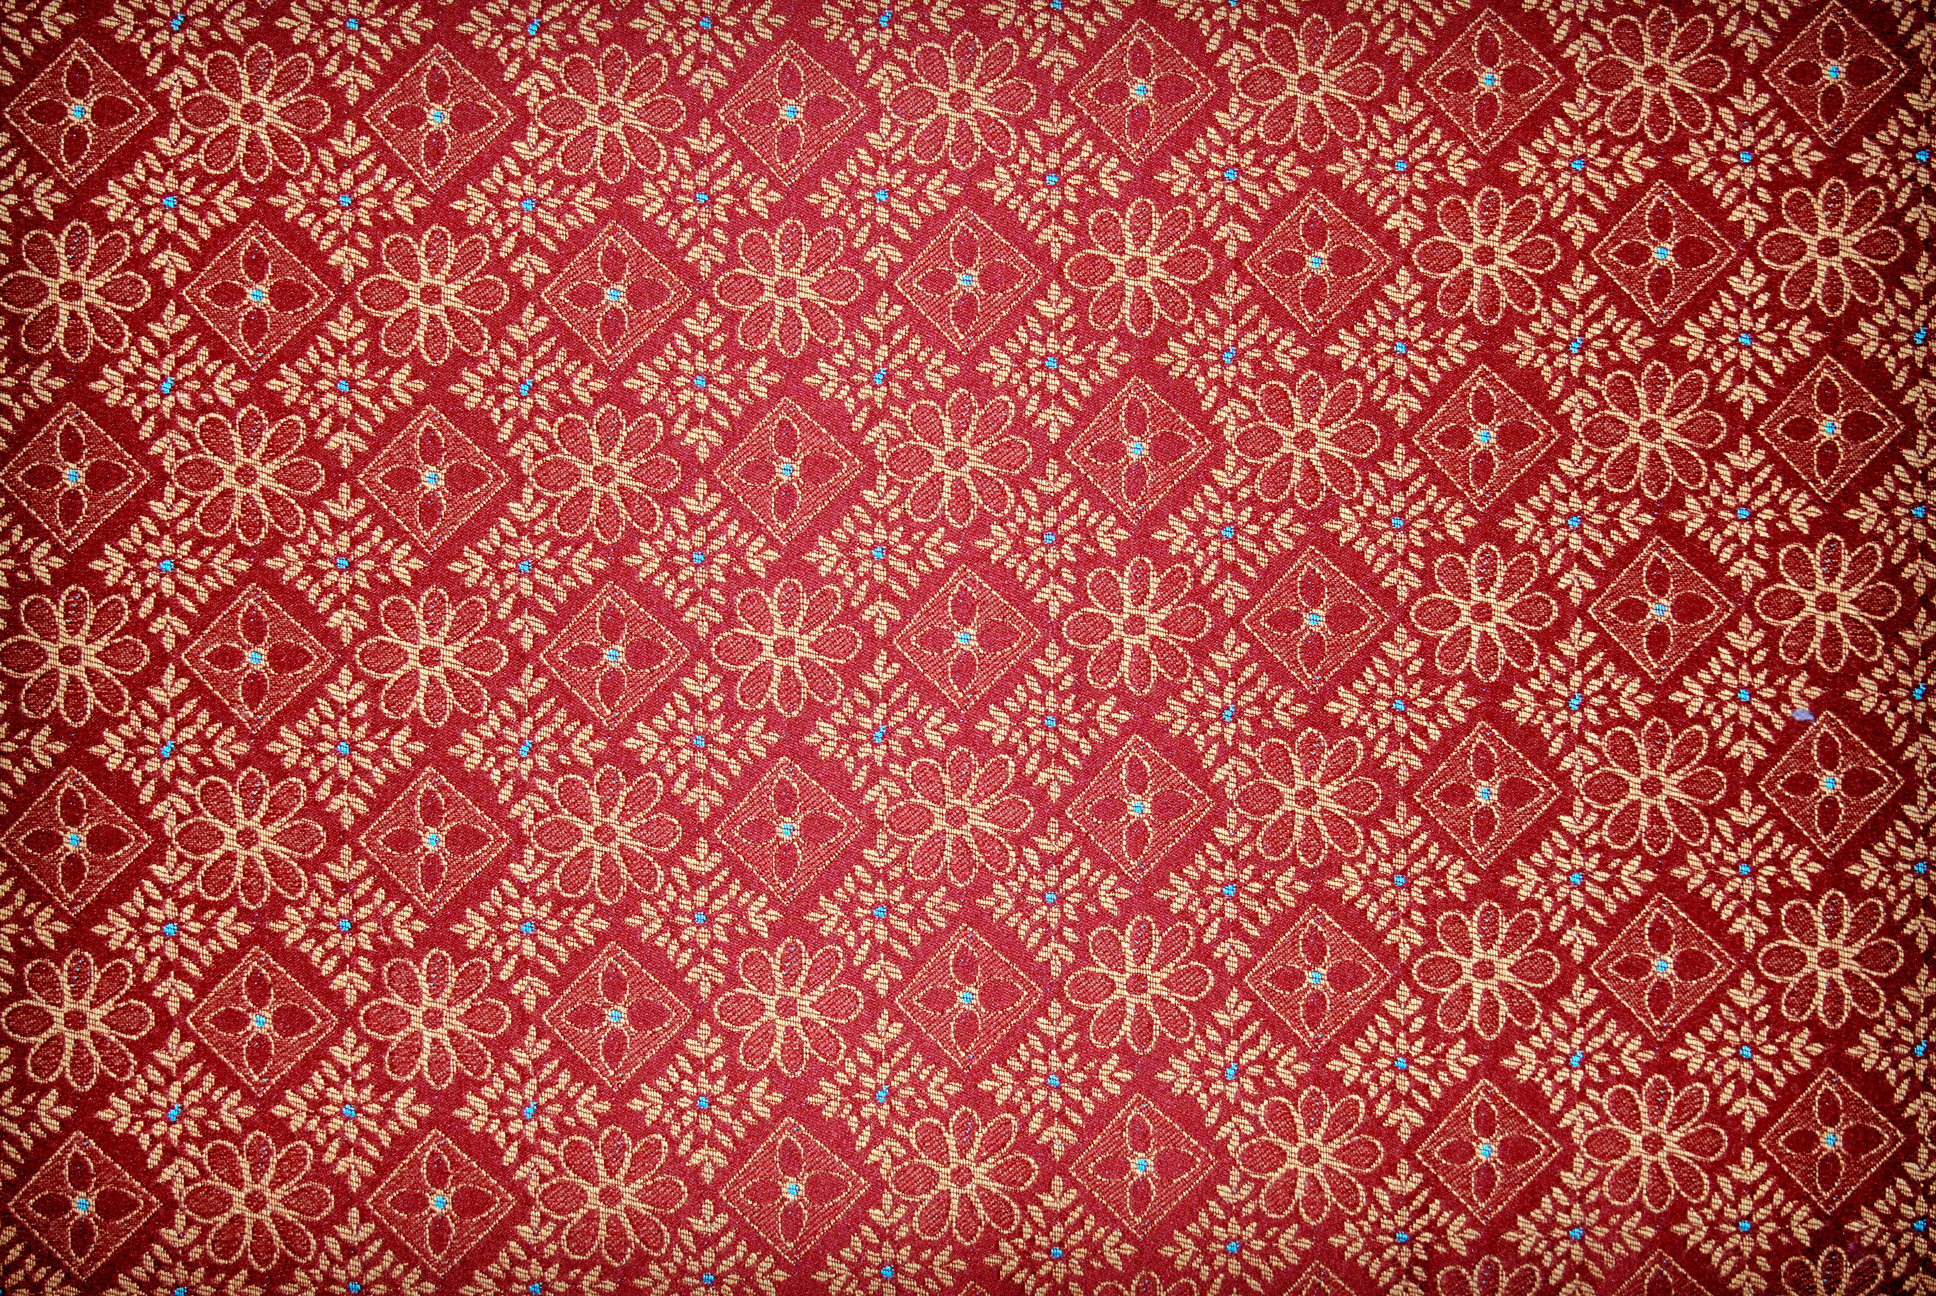 Red vintage wallpaper background texture